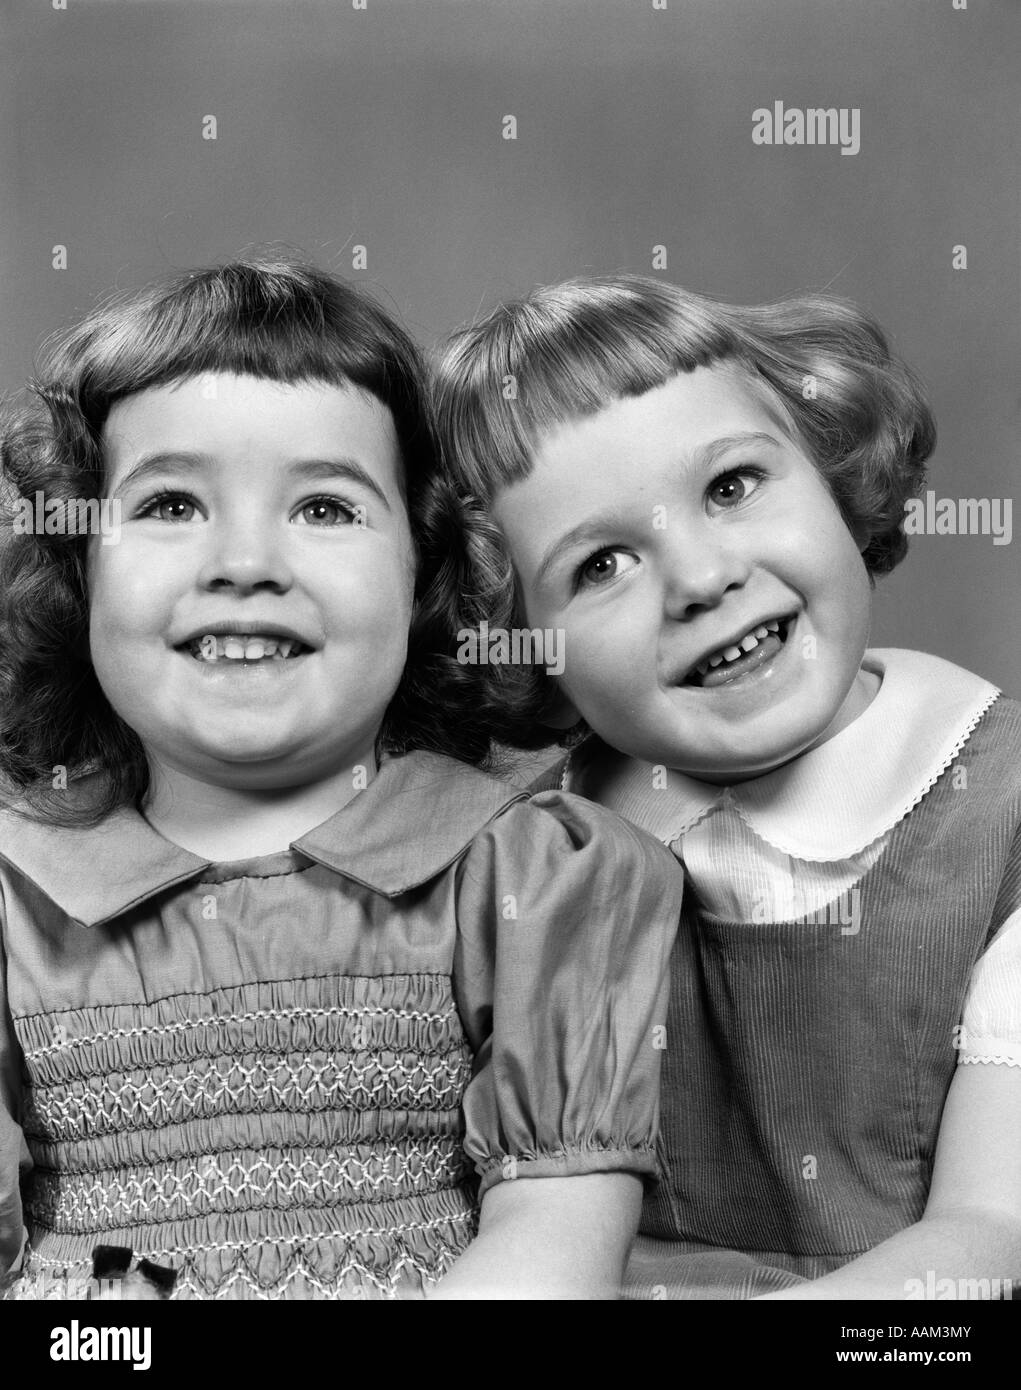 1950s 2 GIRLS WITH BANGS & PETER PAN COLLARS DRESS & CORDUROY JUMPER ...